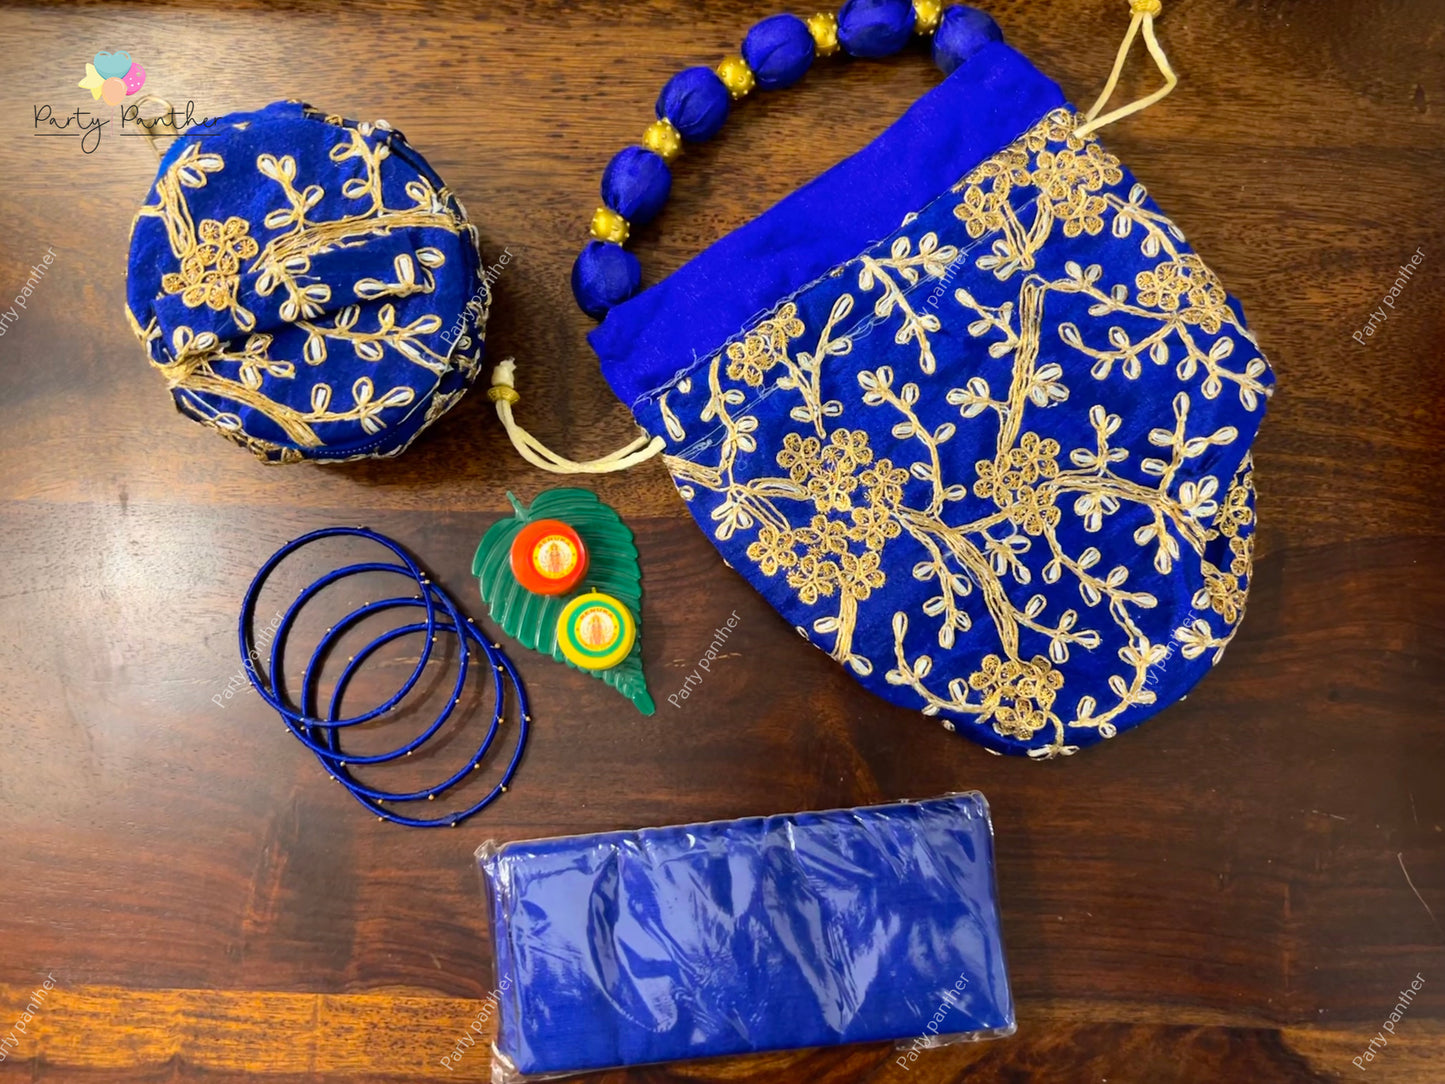 Return gift combo - Gorgeous Potli bags with Bangle Box, Bangles, Blouse bit, Kumkum and turmeric.